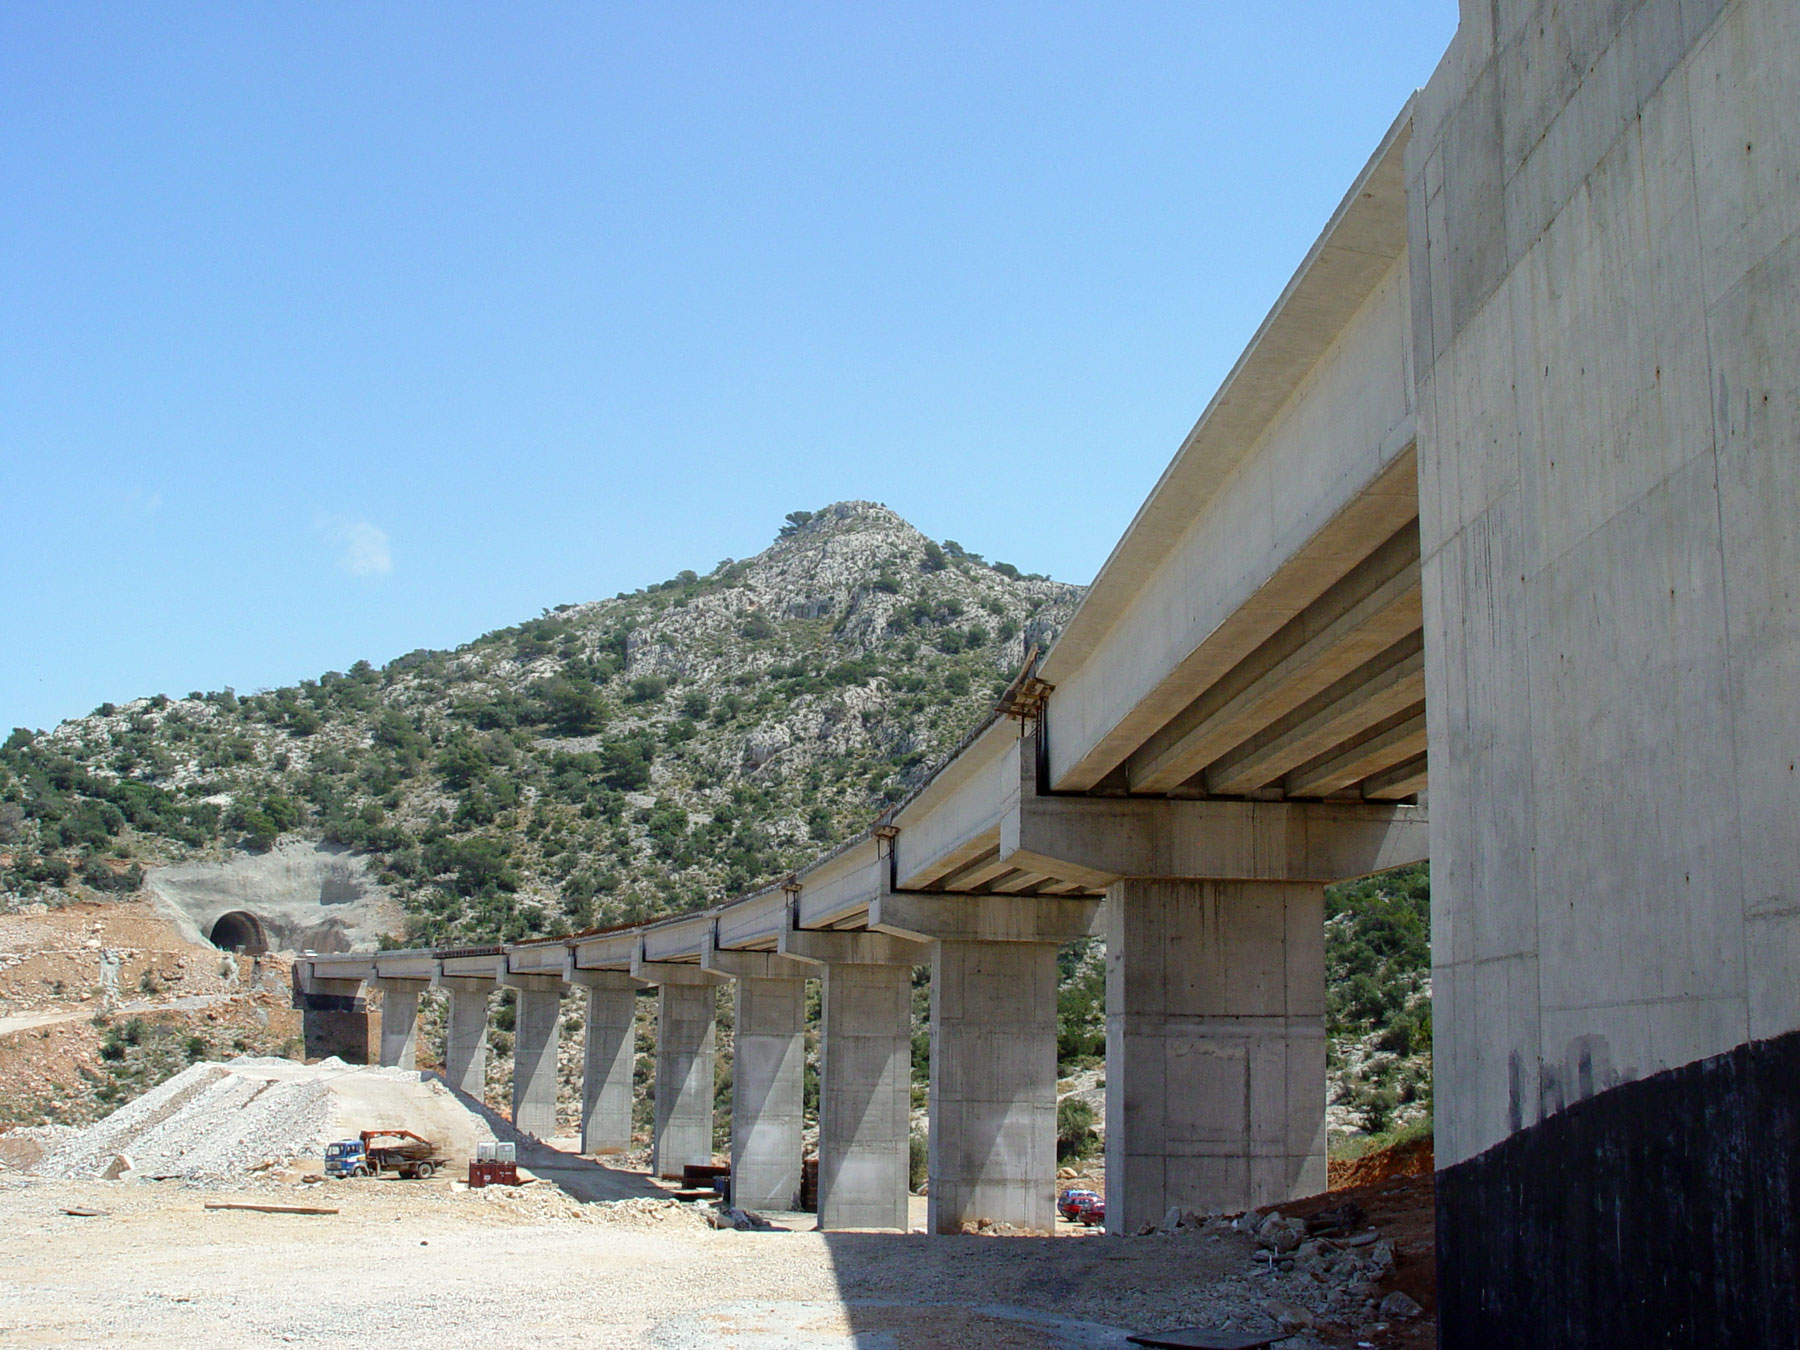 G7 bridge, constructed with the precast beam method